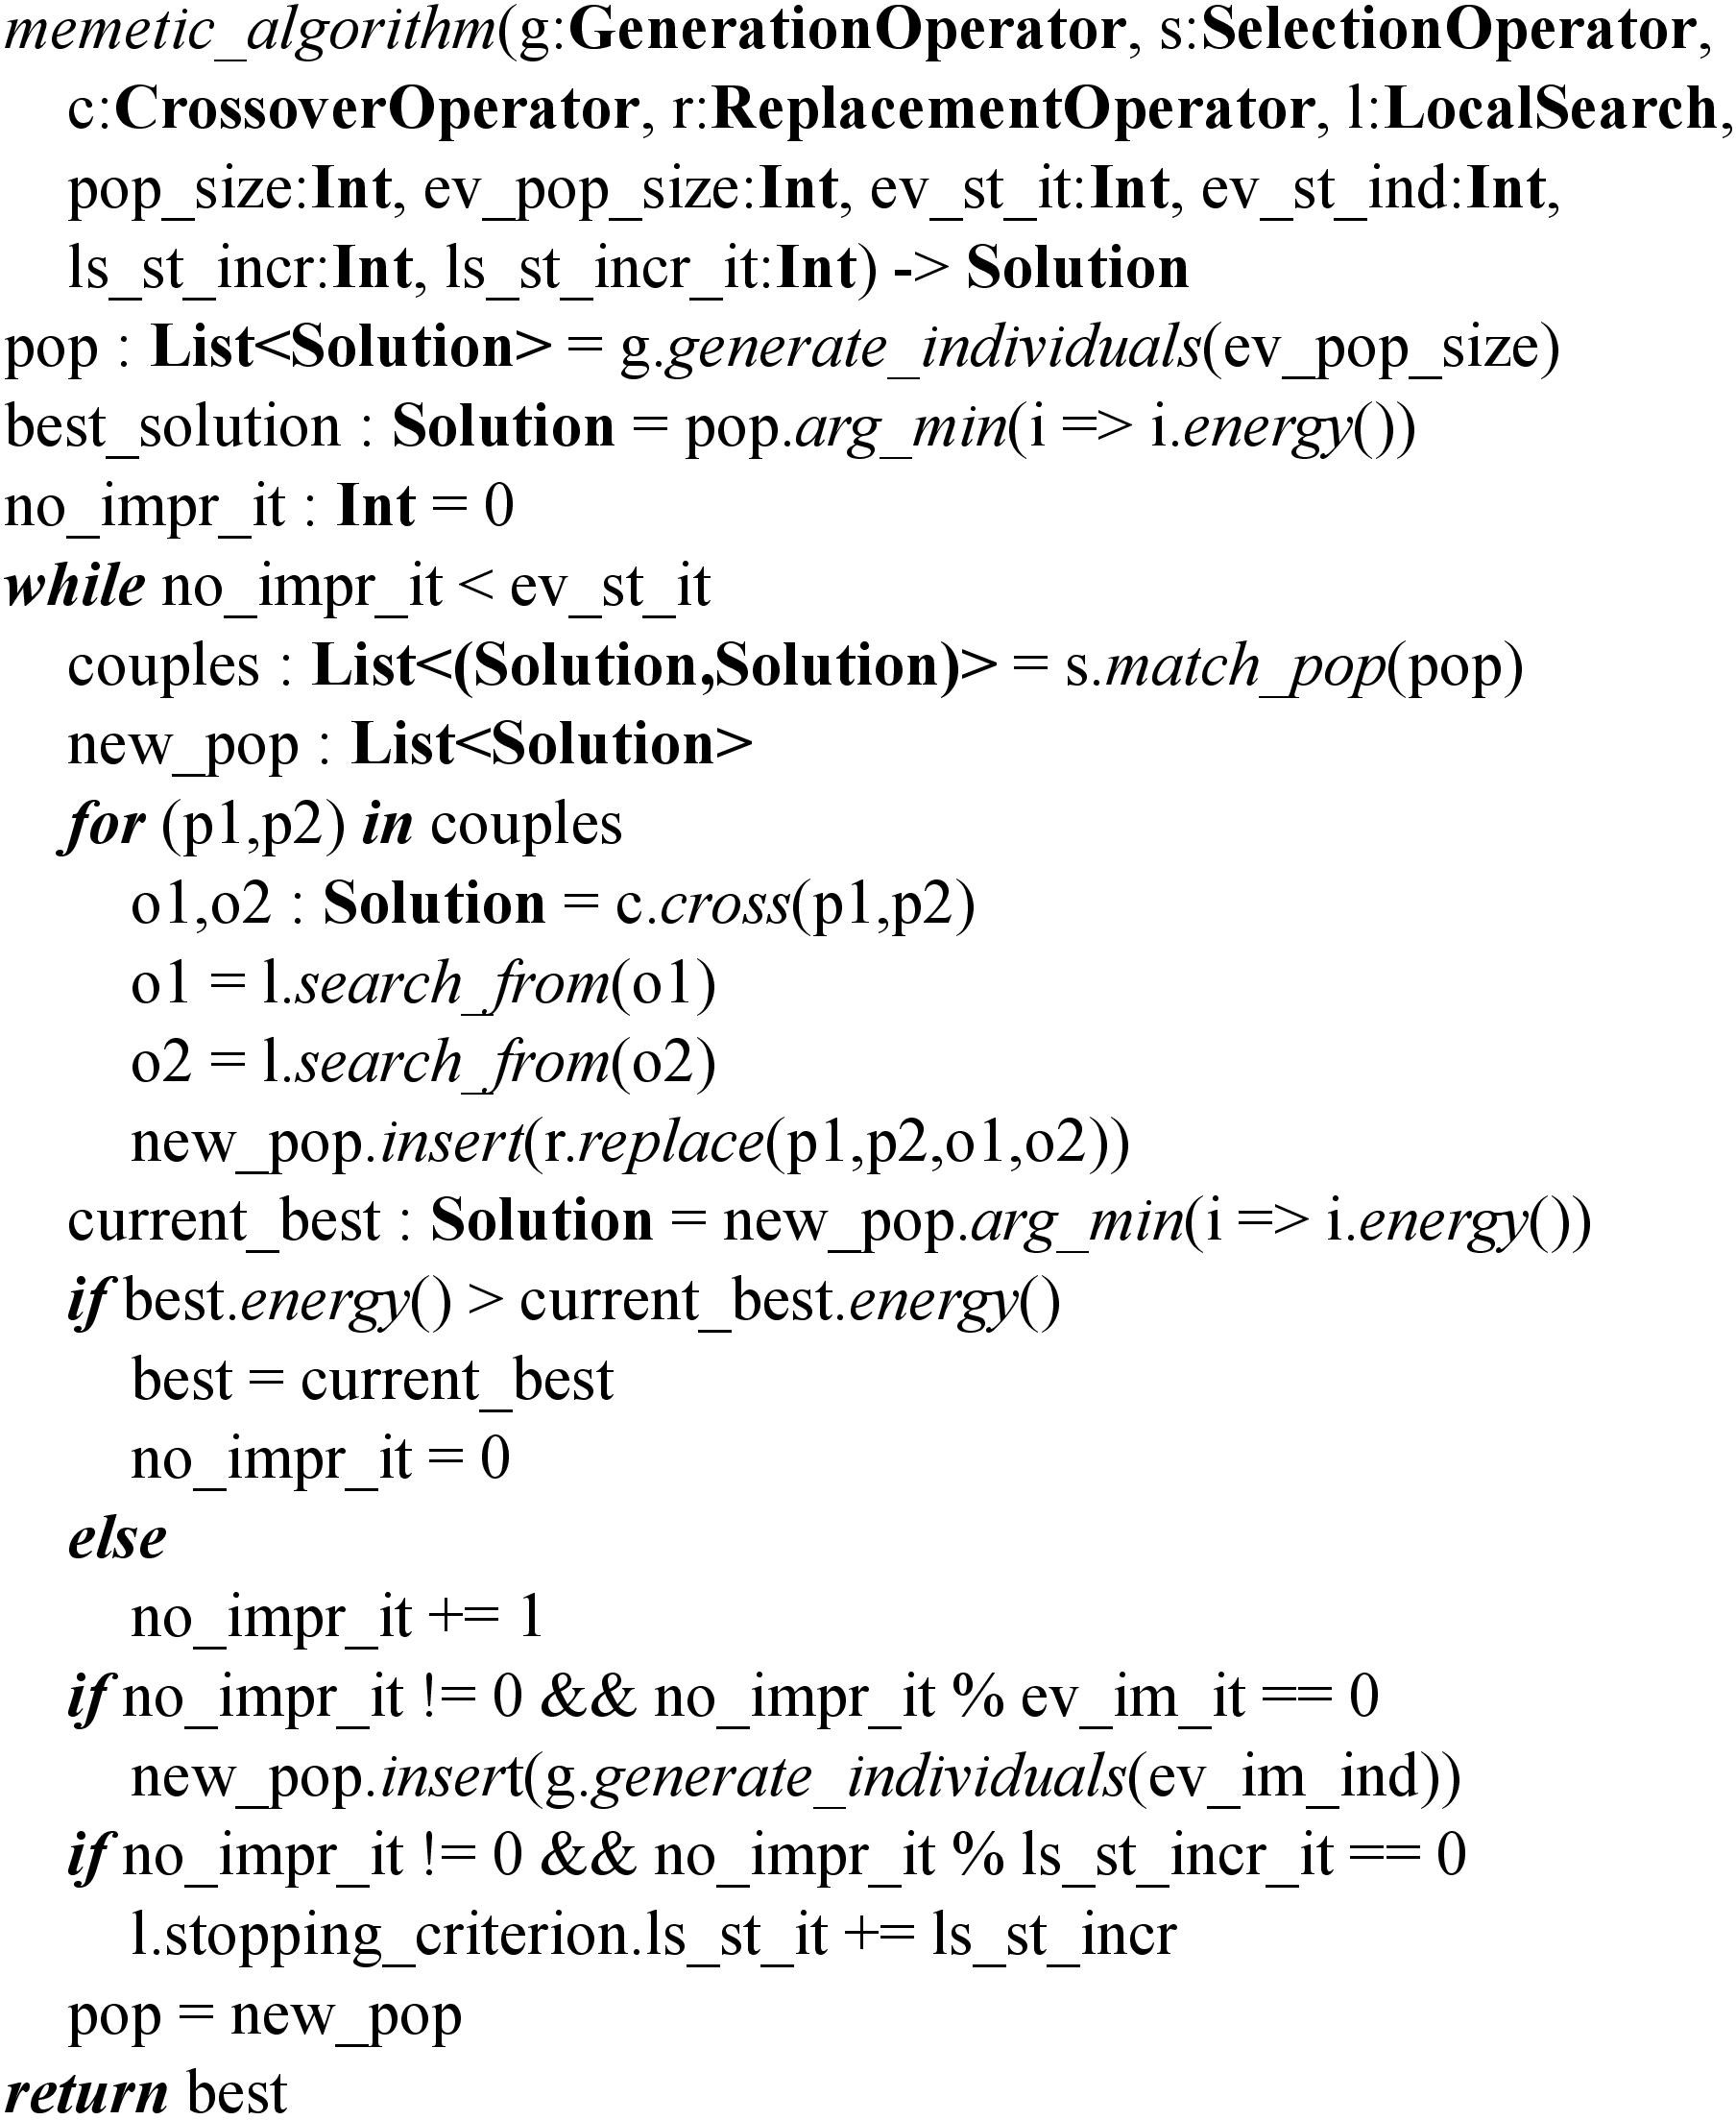 Pseudocode of the memetic algorithm.